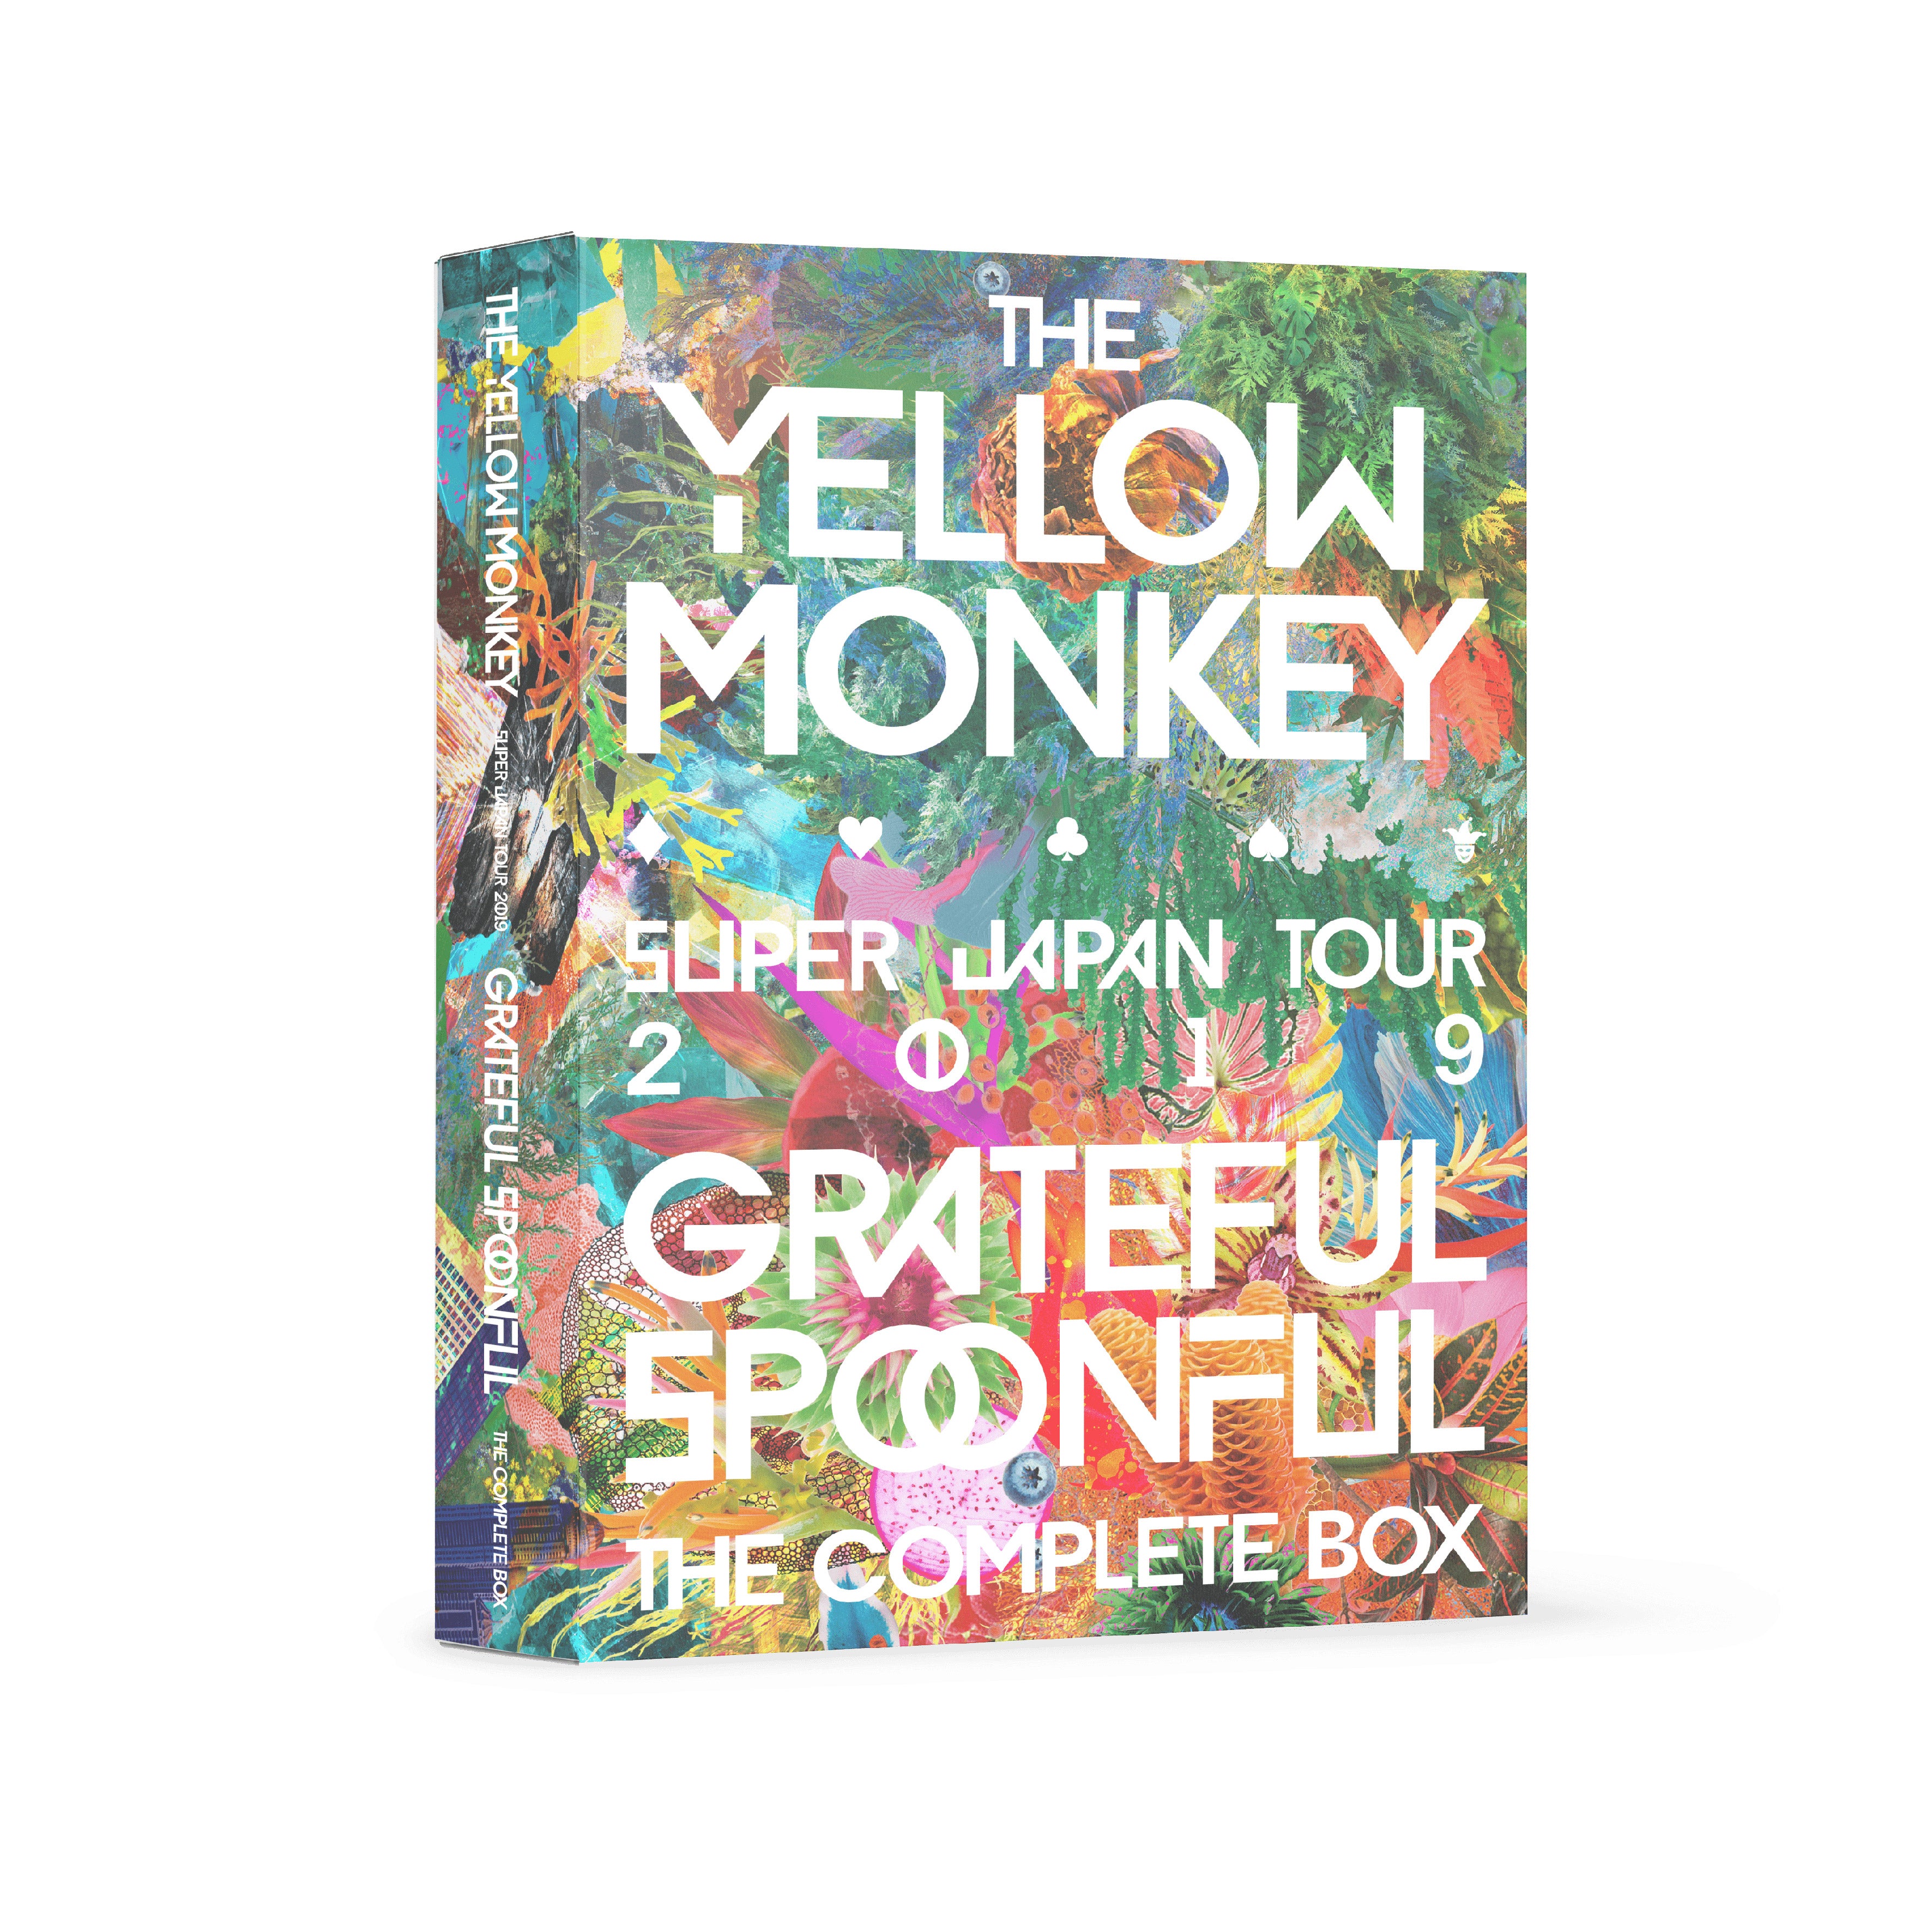 30th Anniversary THE YELLOW MONKEY SUPER DOME TOUR BOX(DVD 